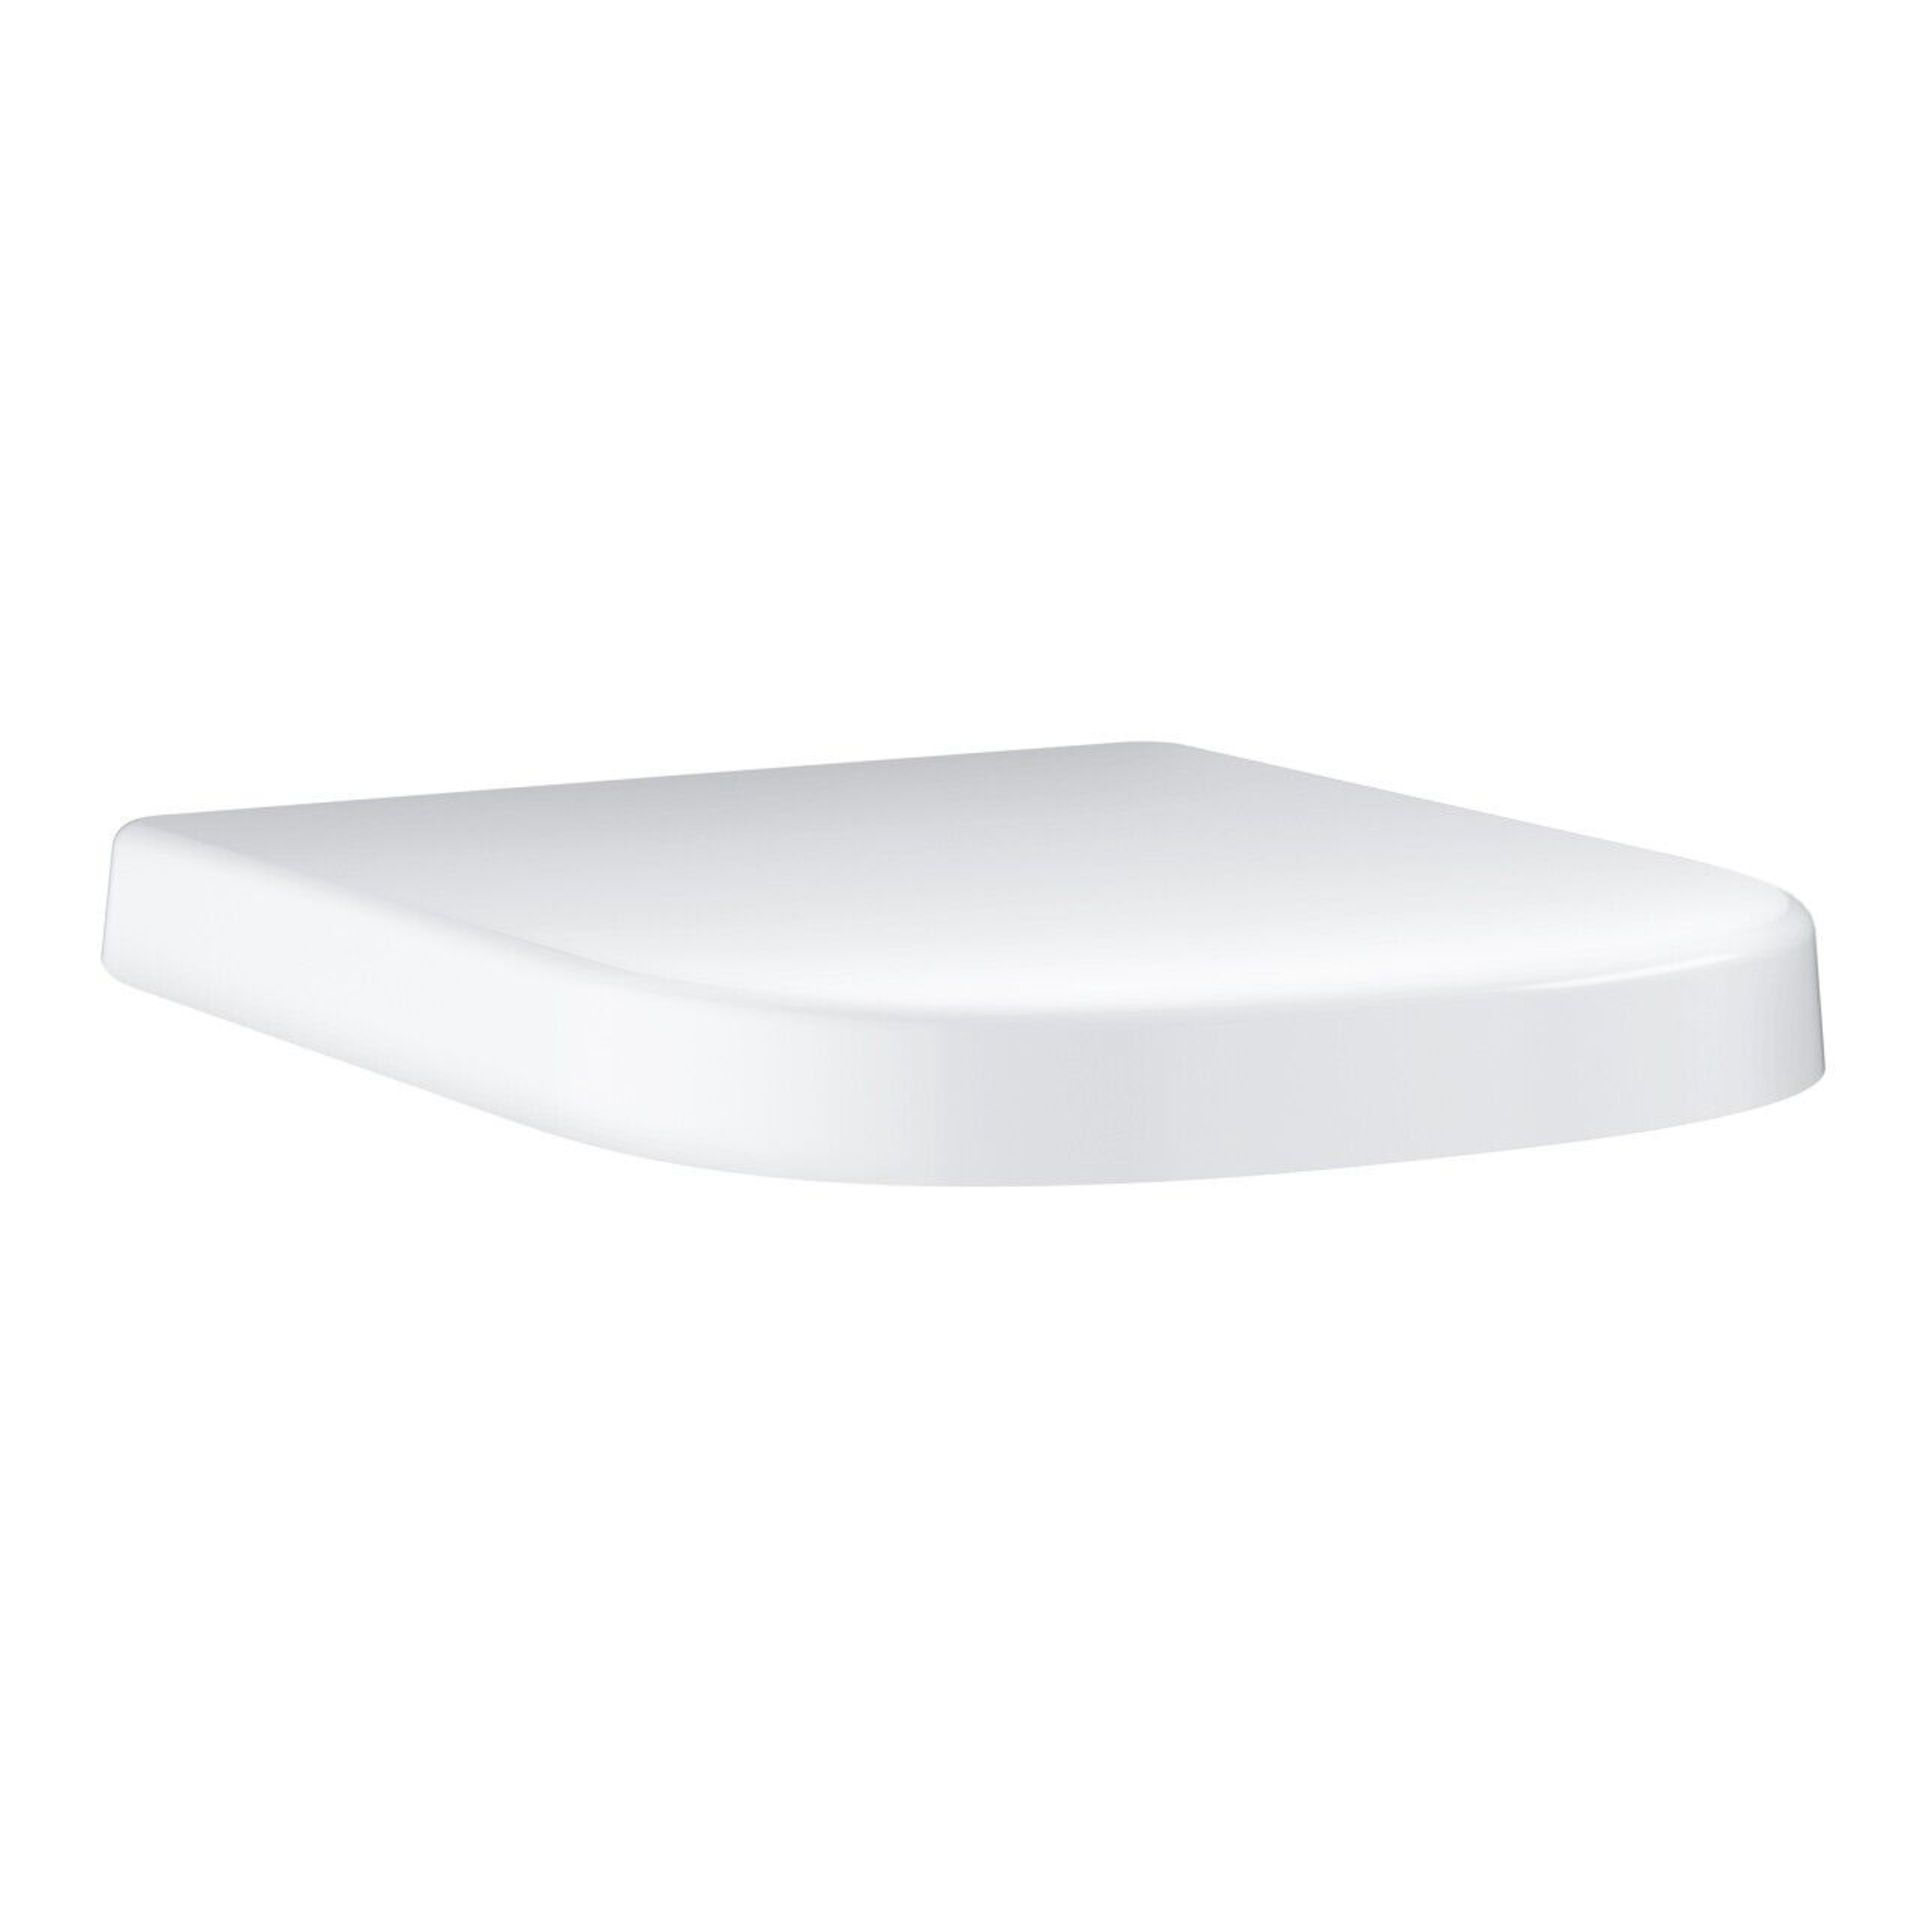 Grohe Euro Ceramic Toilet Seat, Soft Close, White (39330001) - Image 2 of 4